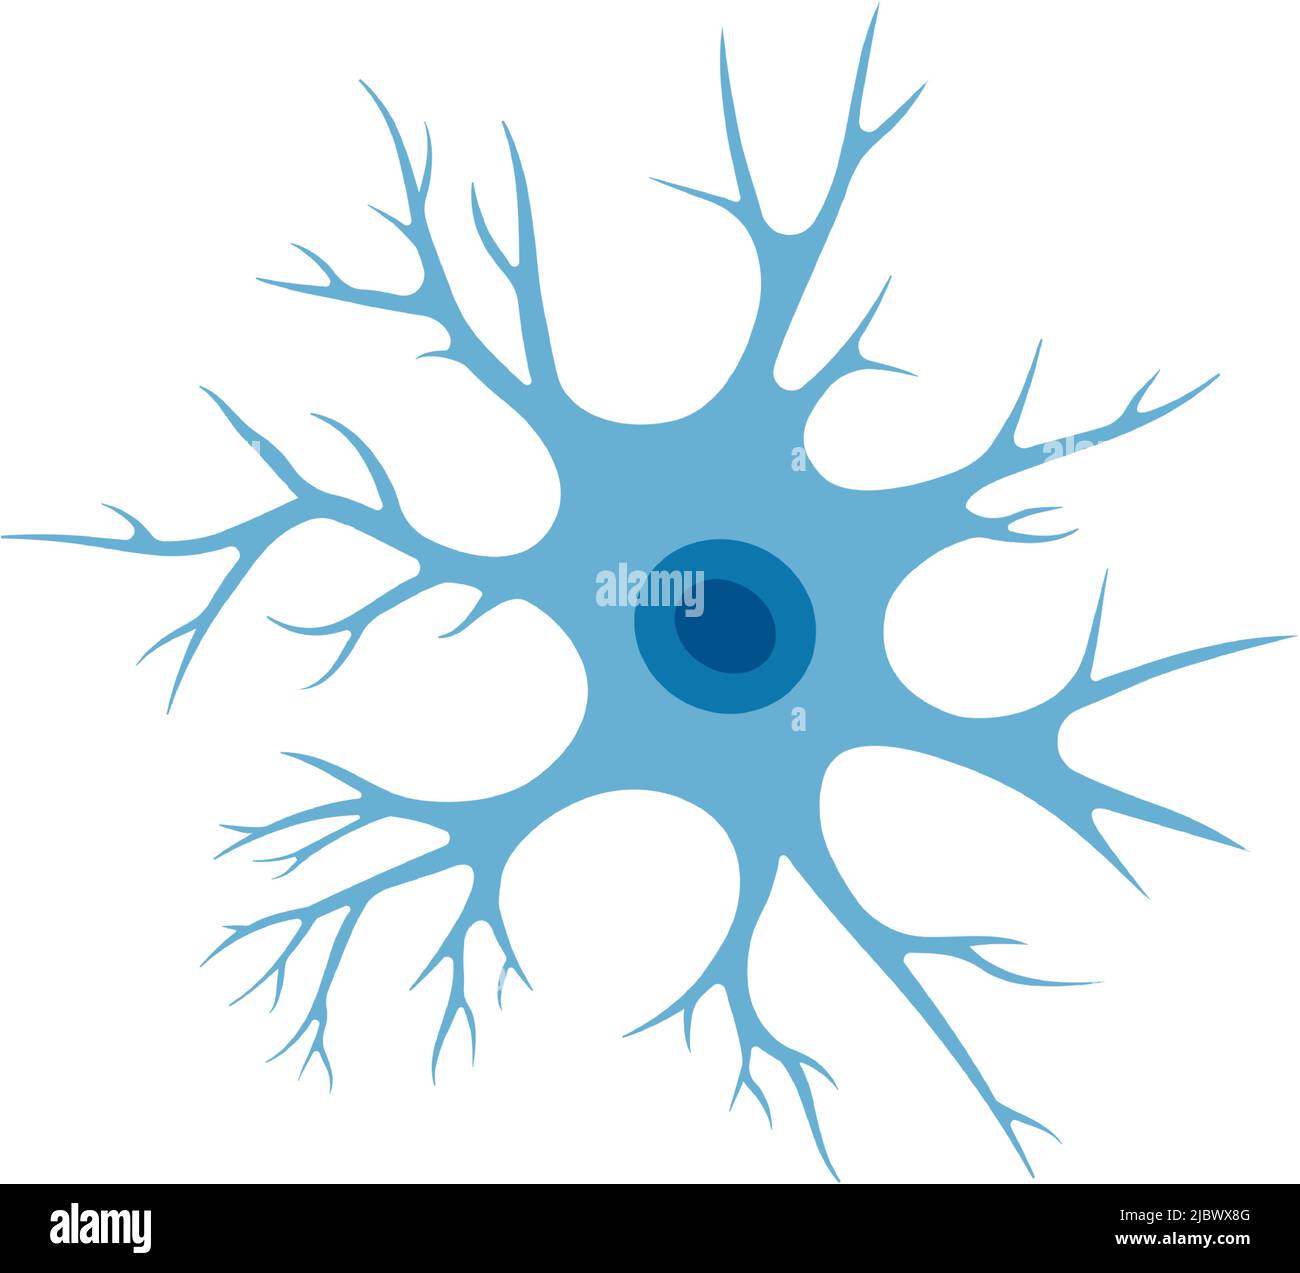 Human neuron cell illustration. Brain neuron structure. Cell body, nucleus,  axon and dendrites scheme. Neurology illustration Stock Vector Image & Art  - Alamy